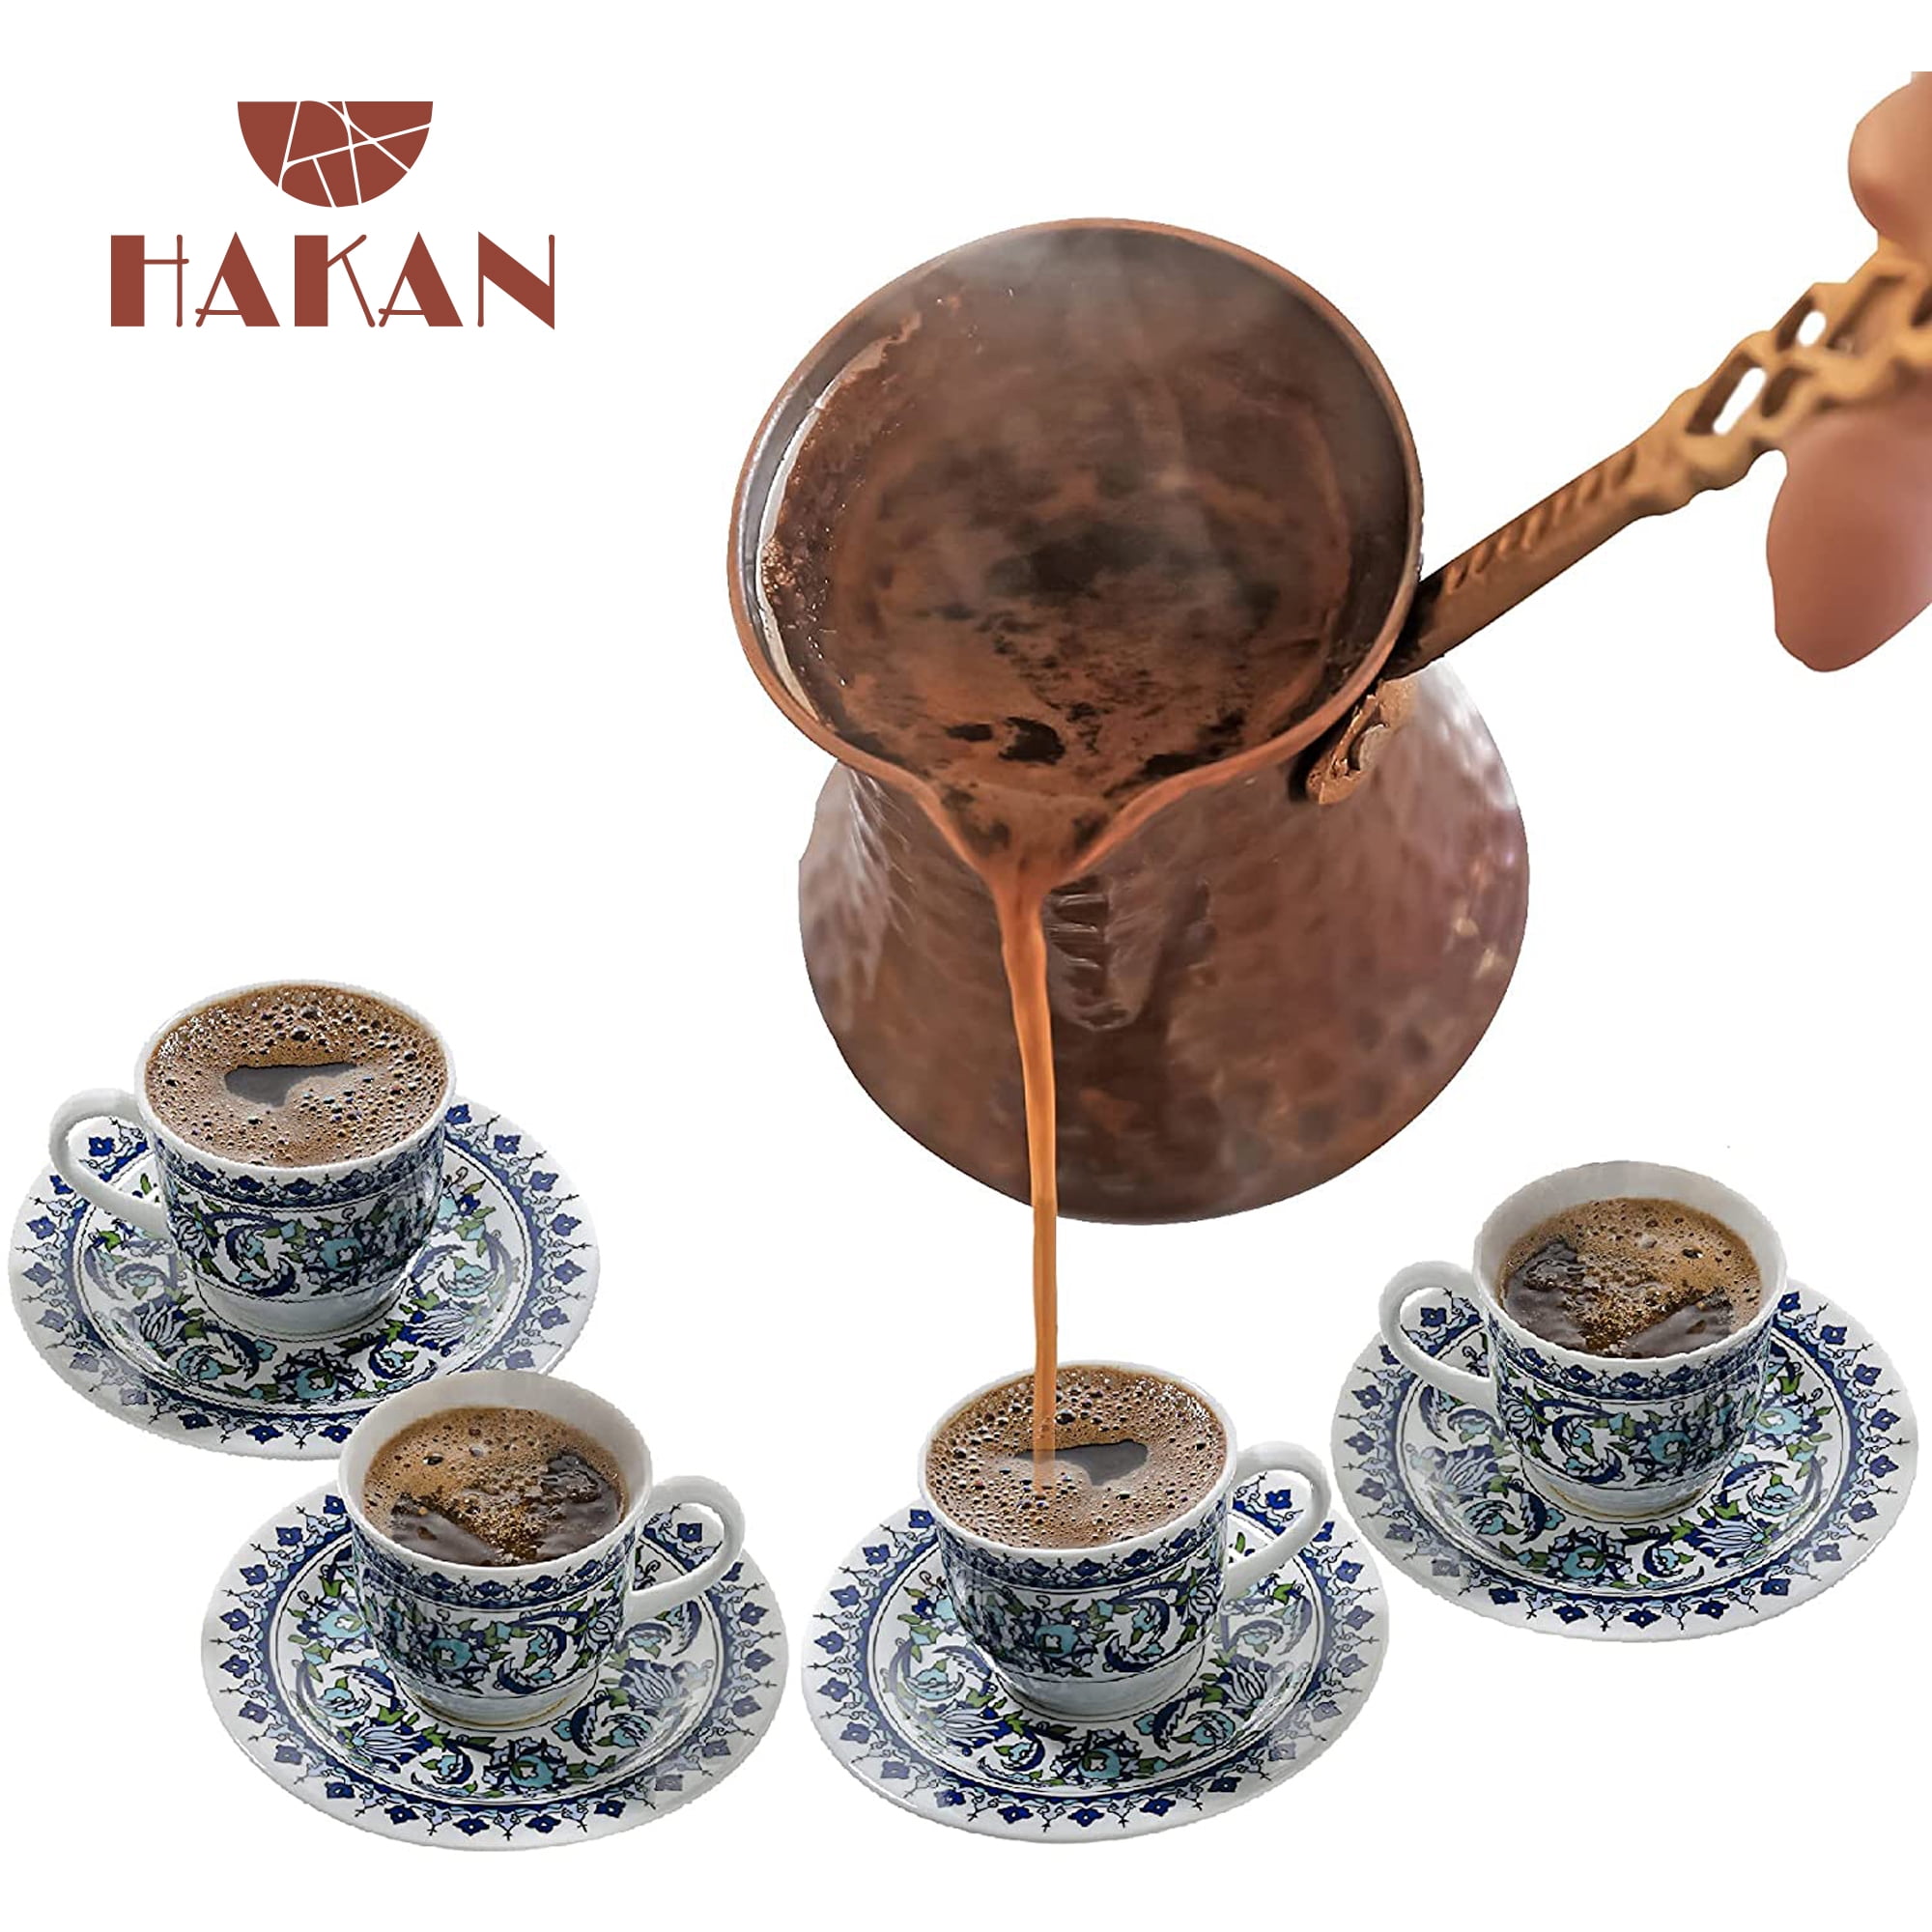 IMEEA Butter Milk Warmer Turkish Greek Arabic Coffee Pot Stovetop Coff